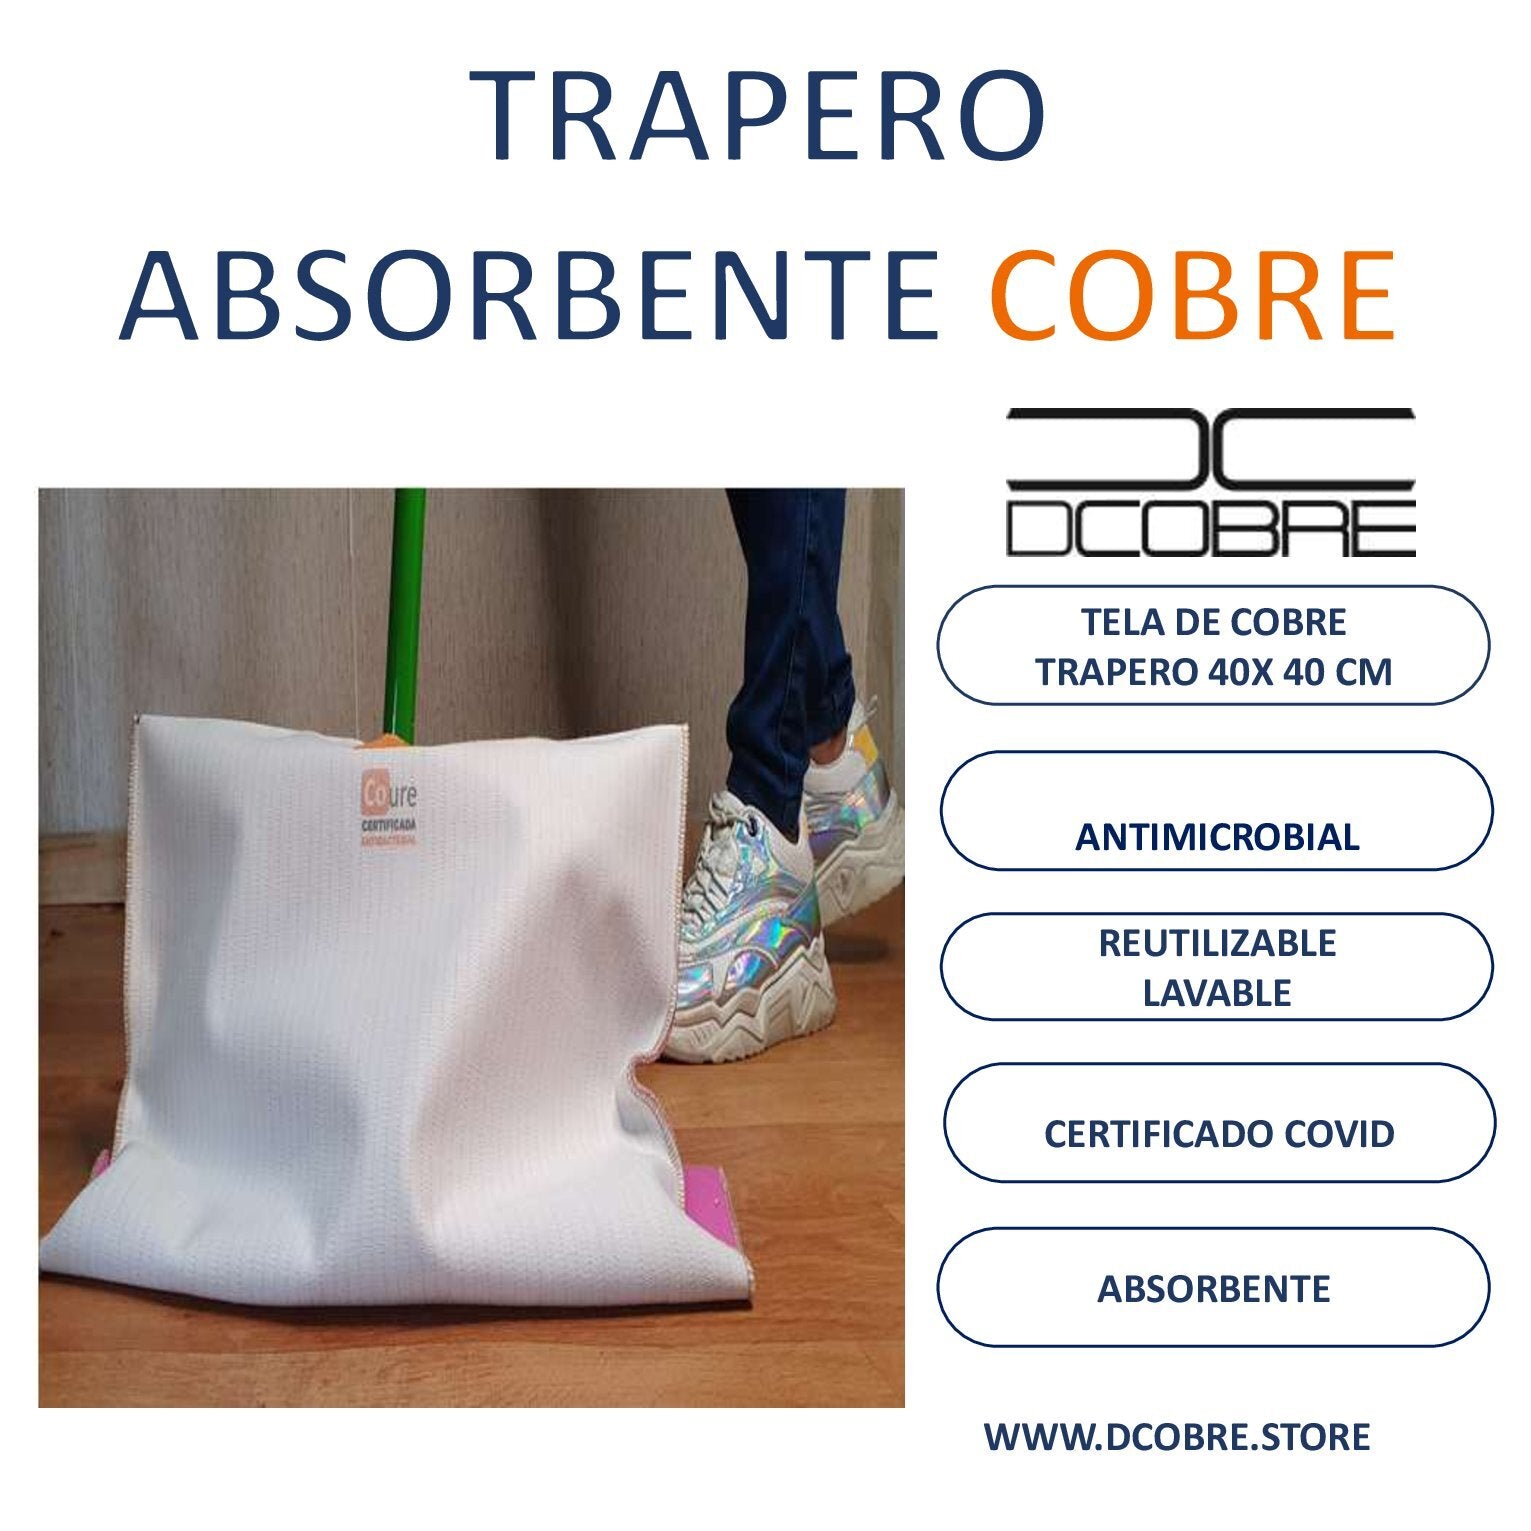 Trapero 1/2 saco con COBRE activo. ABSORBENTE, NUEVO - DCobre